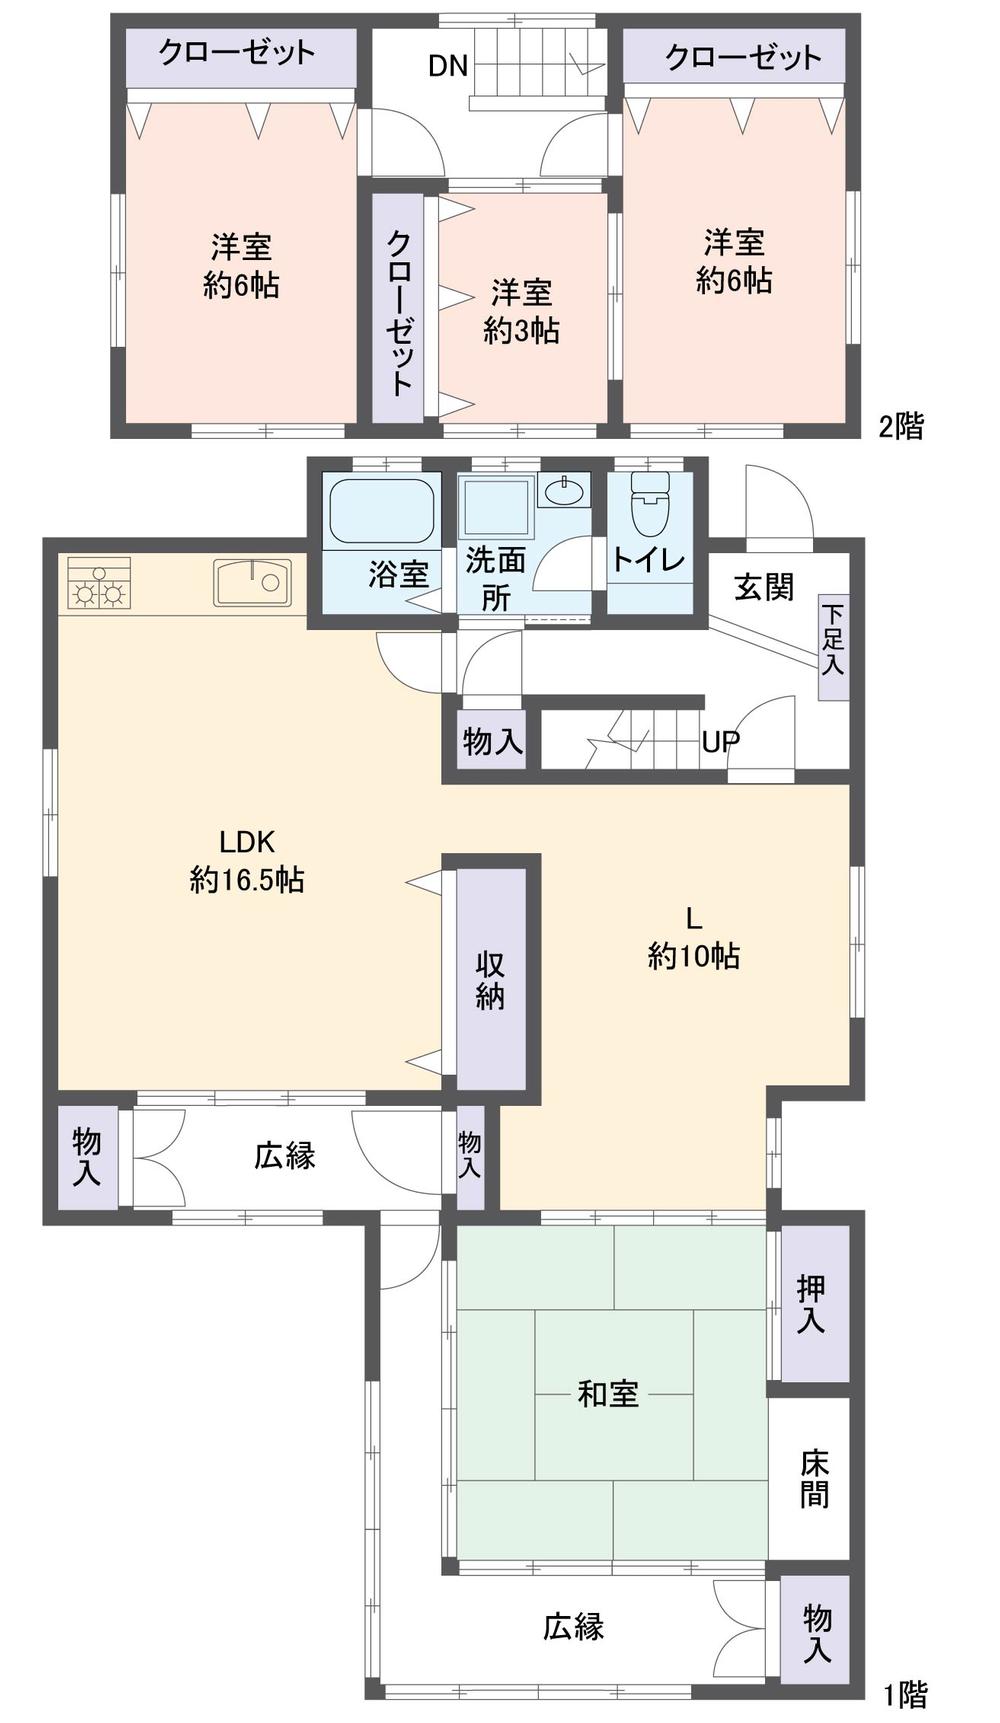 Floor plan. 22,900,000 yen, 4LDK, Land area 452.62 sq m , Building area 148.71 sq m